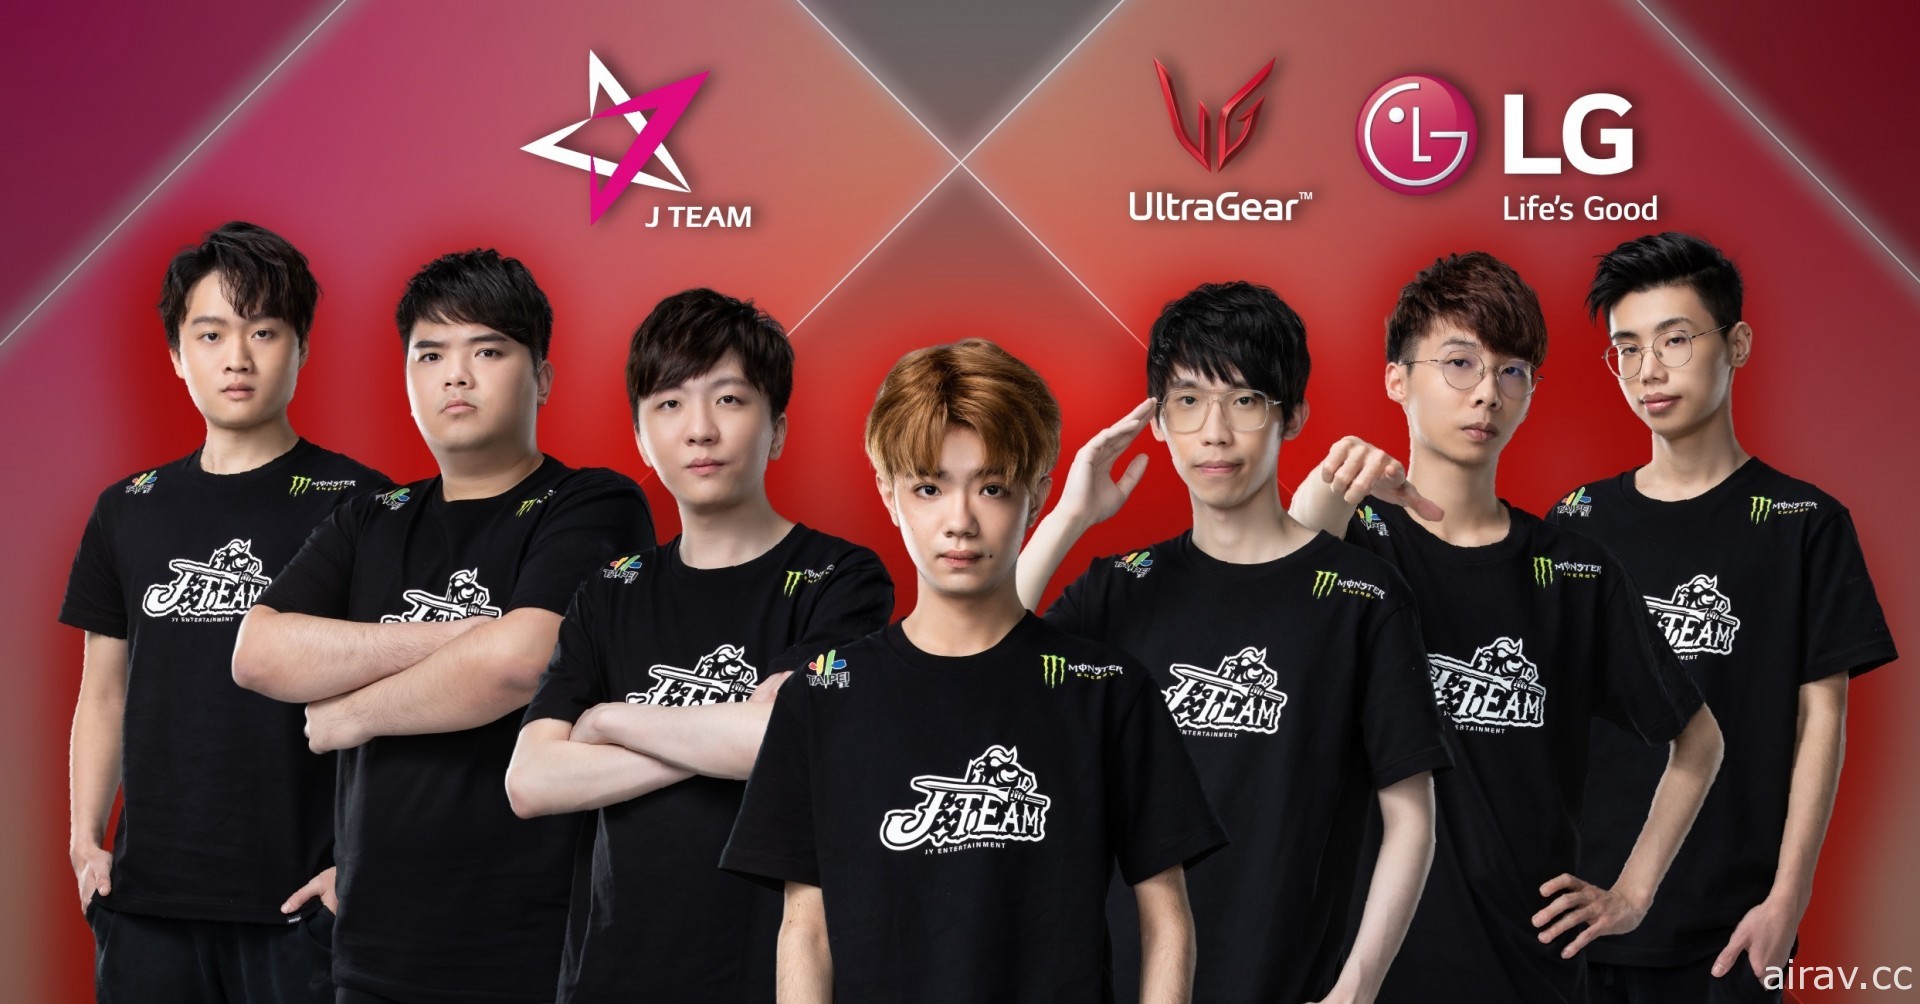 LG 電競螢幕 UltraGear 成為《英雄聯盟》「臺北 J Team」贊助合作夥伴